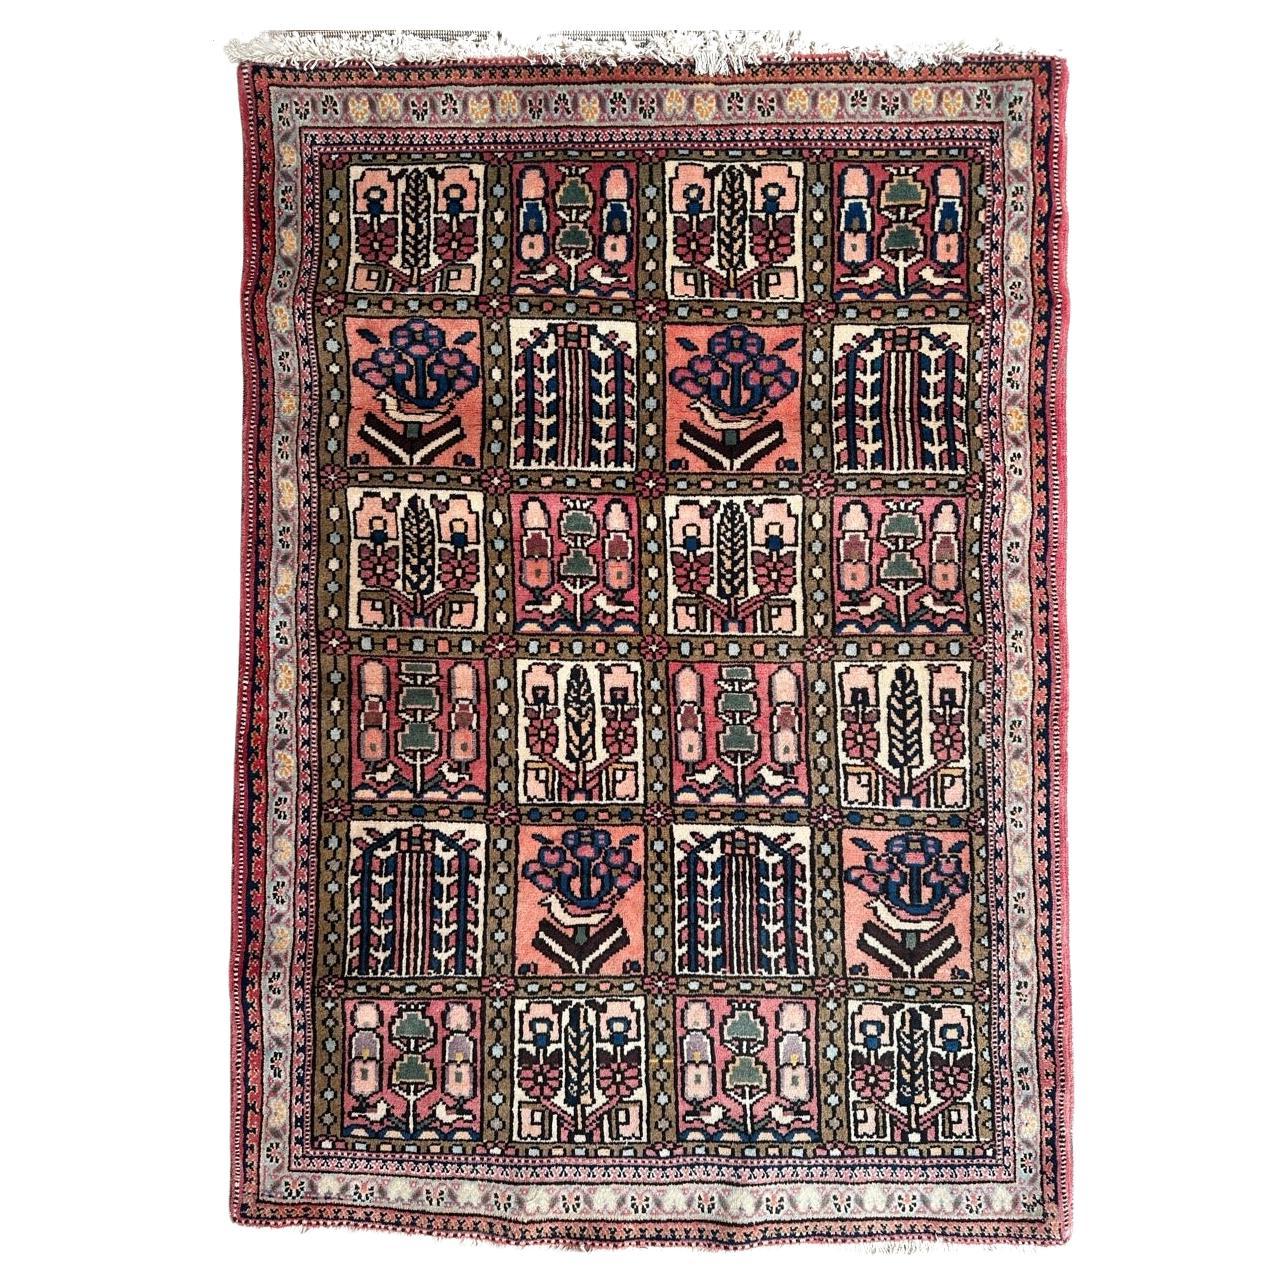 Bobyrug’s nice vintage Bakhtiar rug 